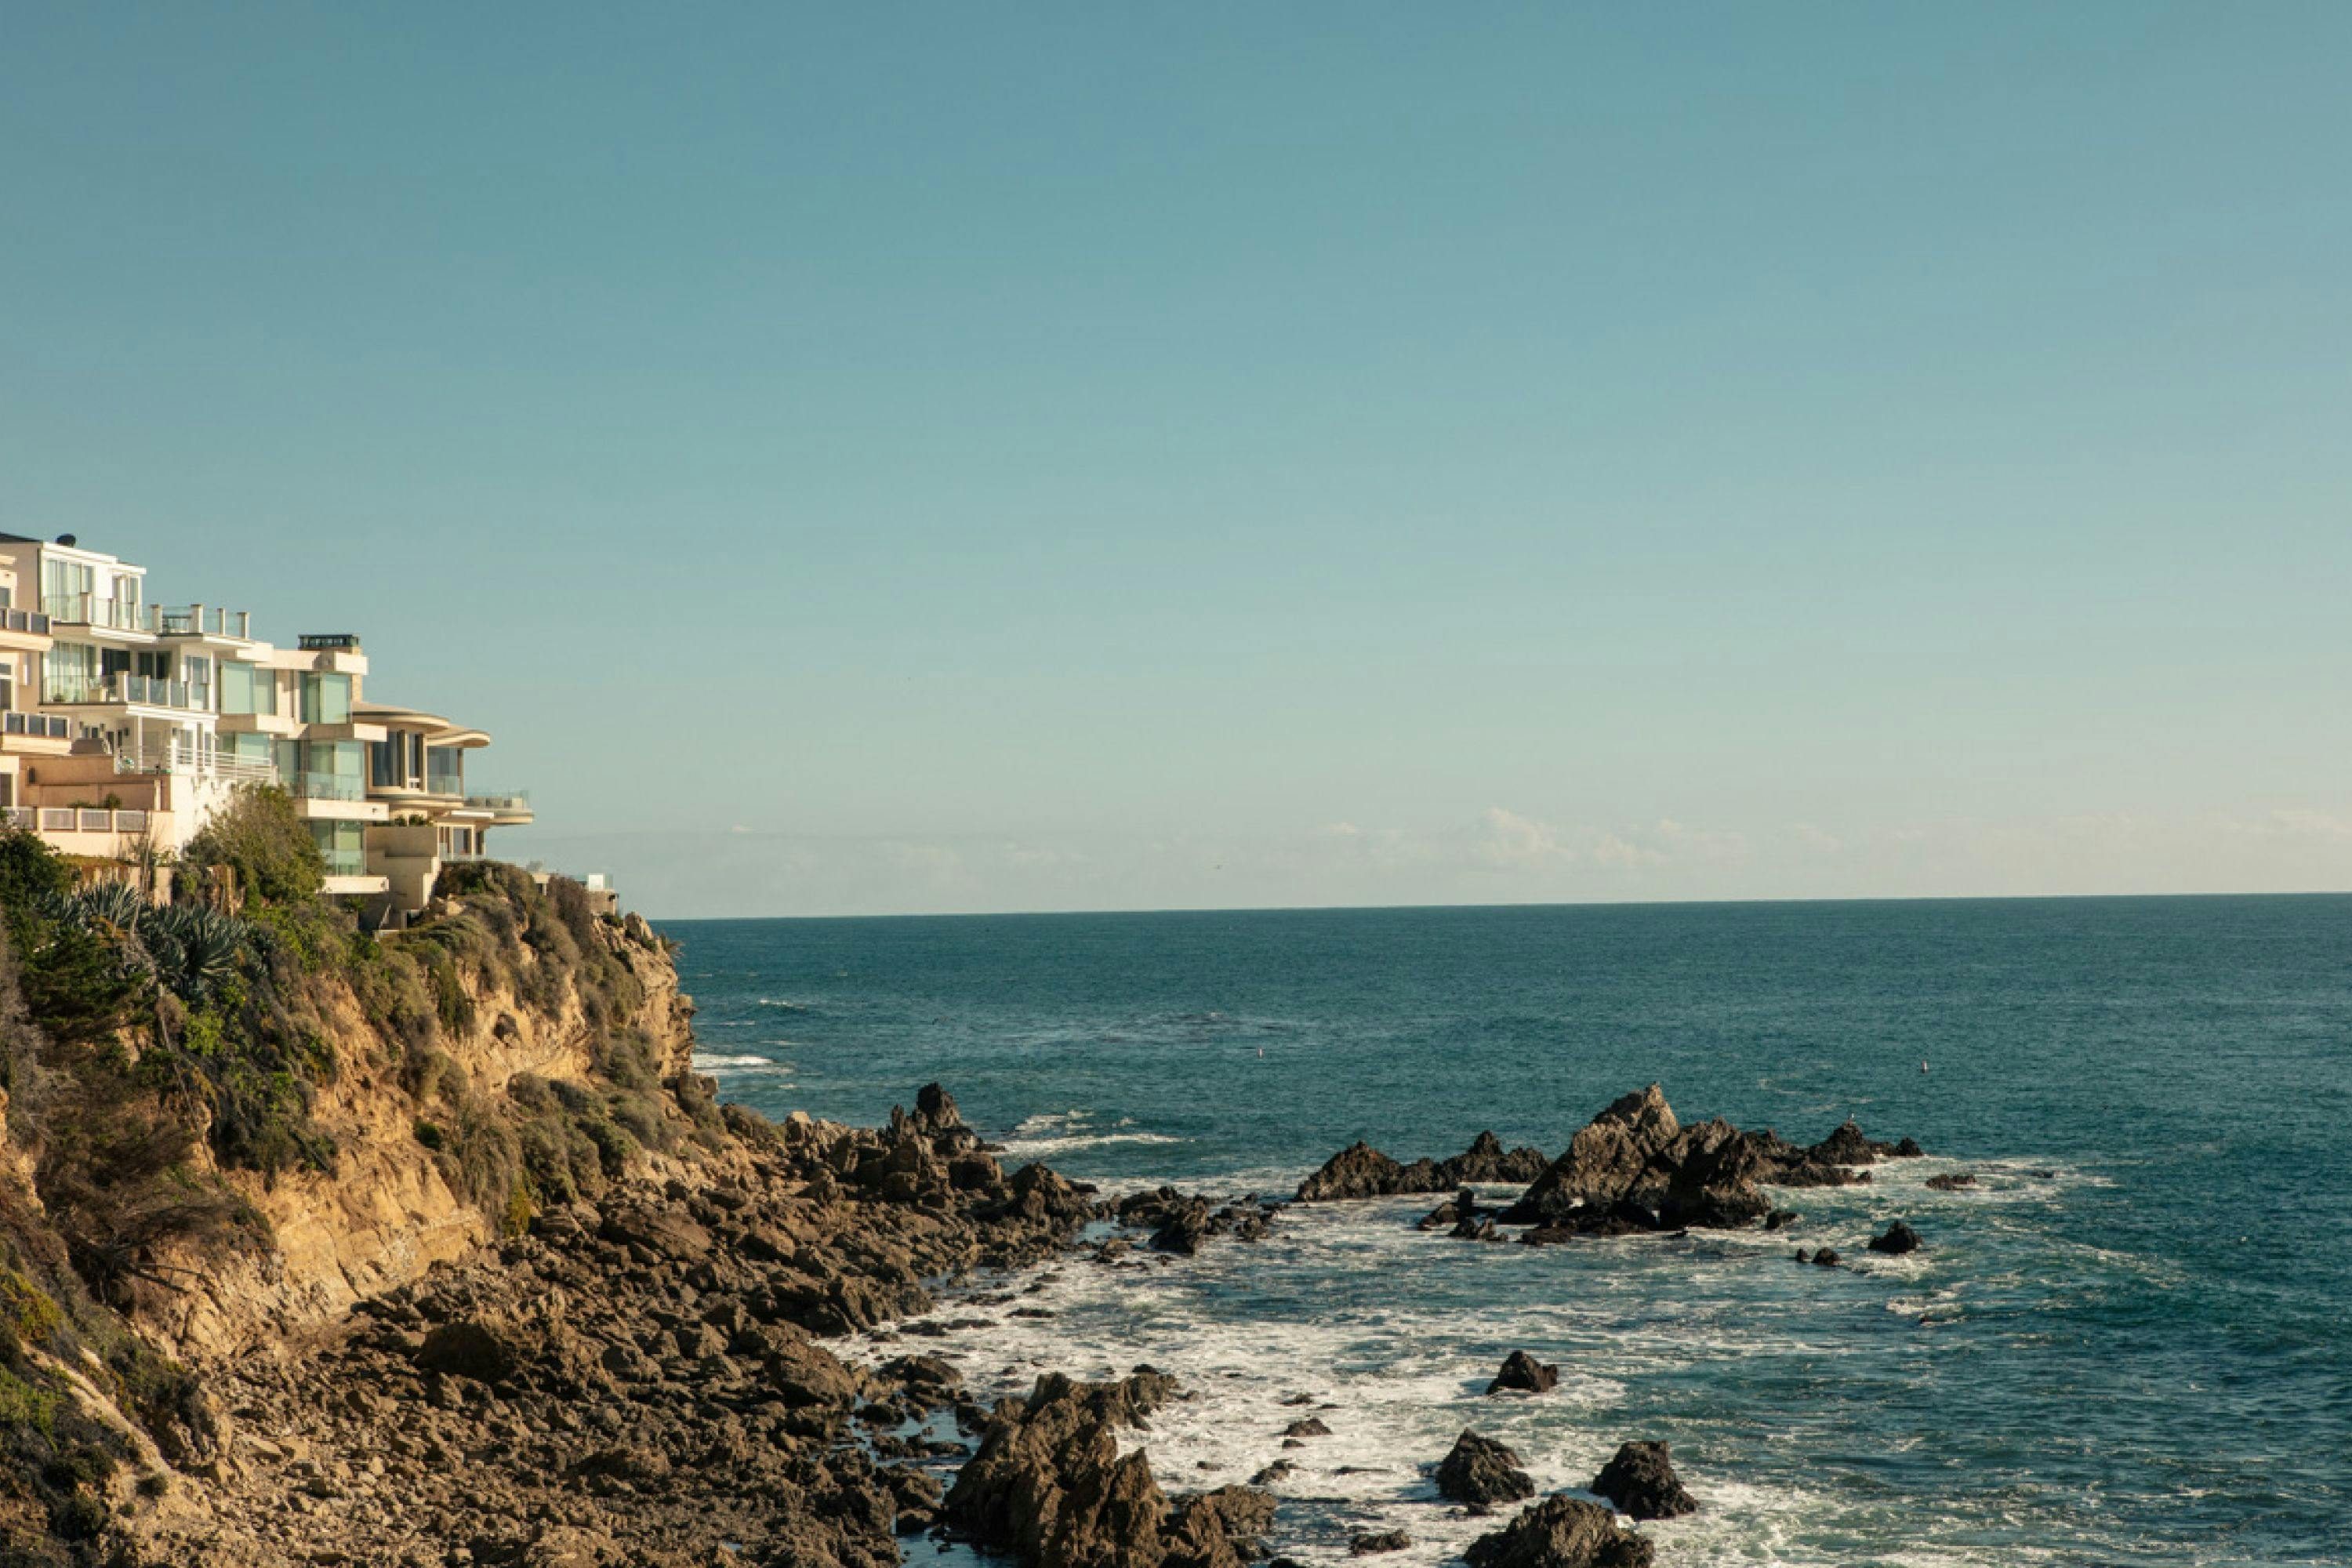 A cliffside villa near the ocean on a cloudless day